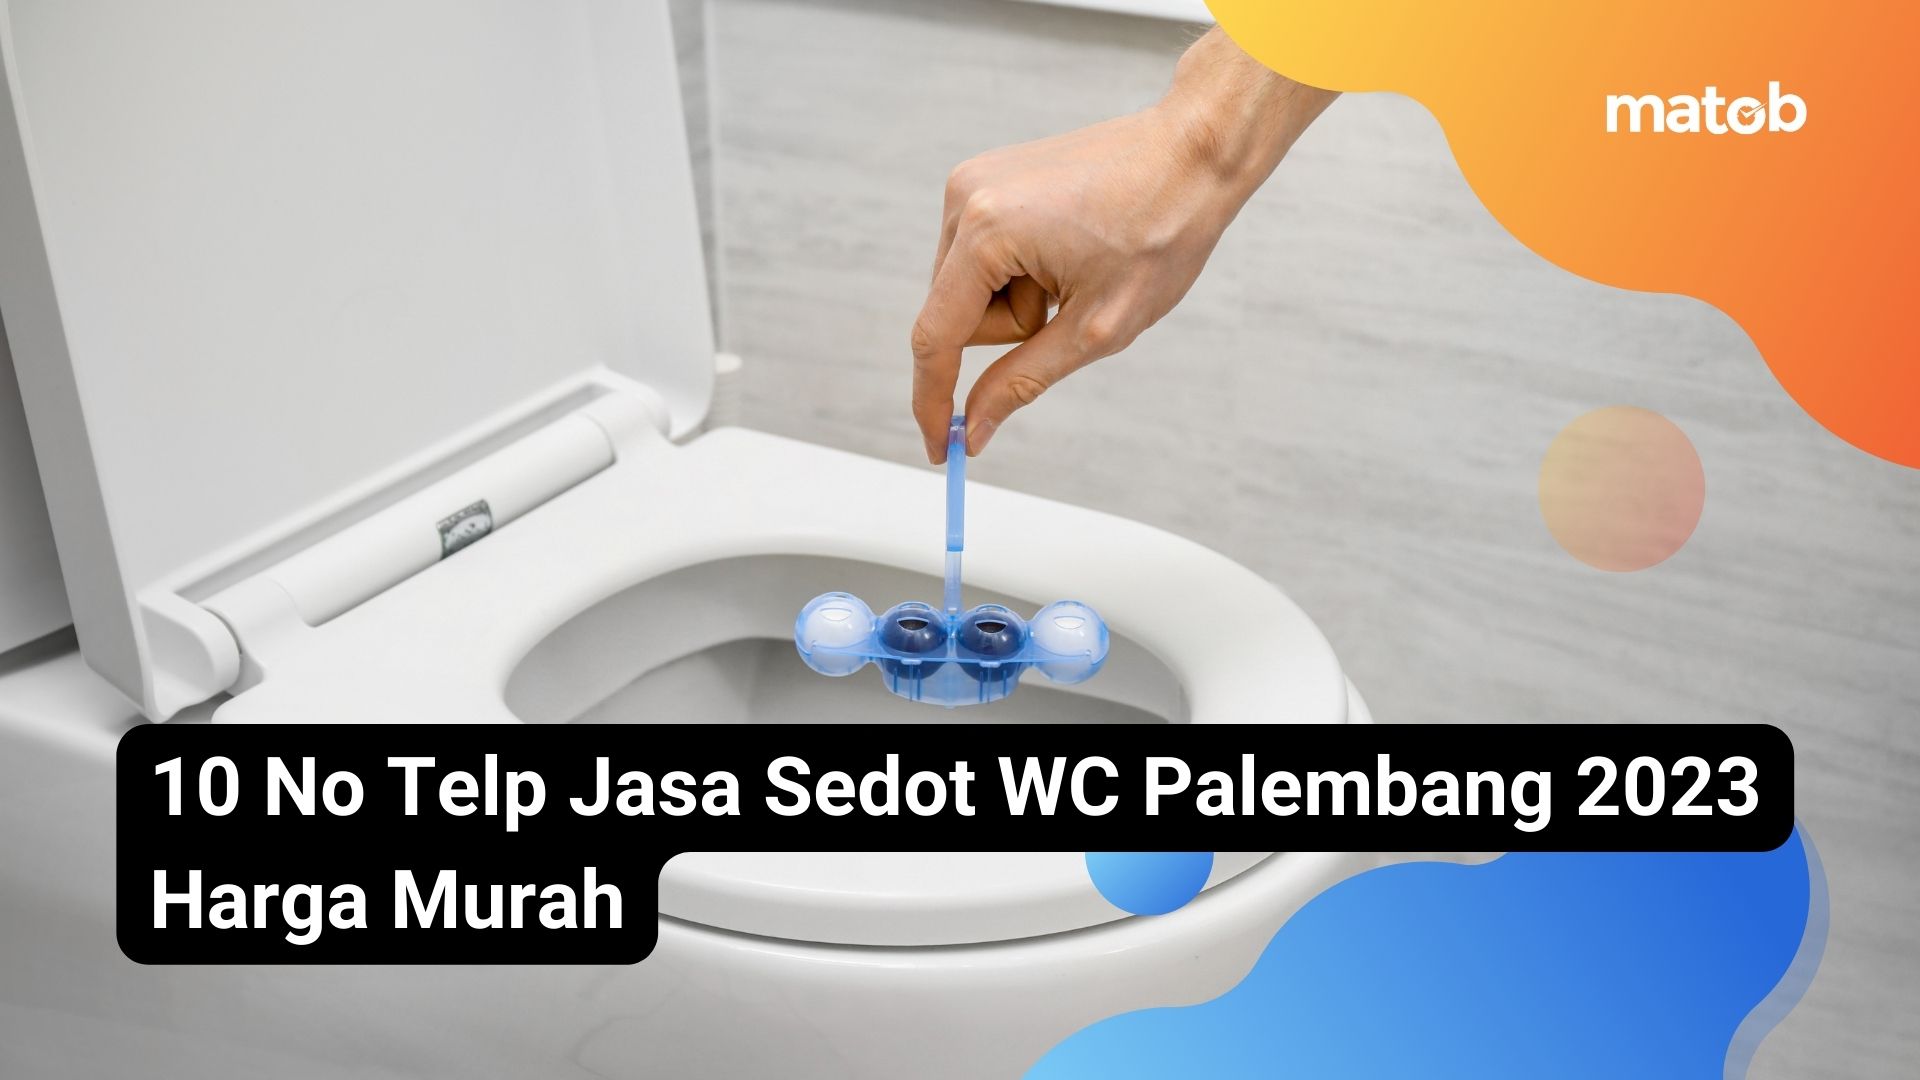 10 No Telp Jasa Sedot WC Palembang 2023 Harga Murah